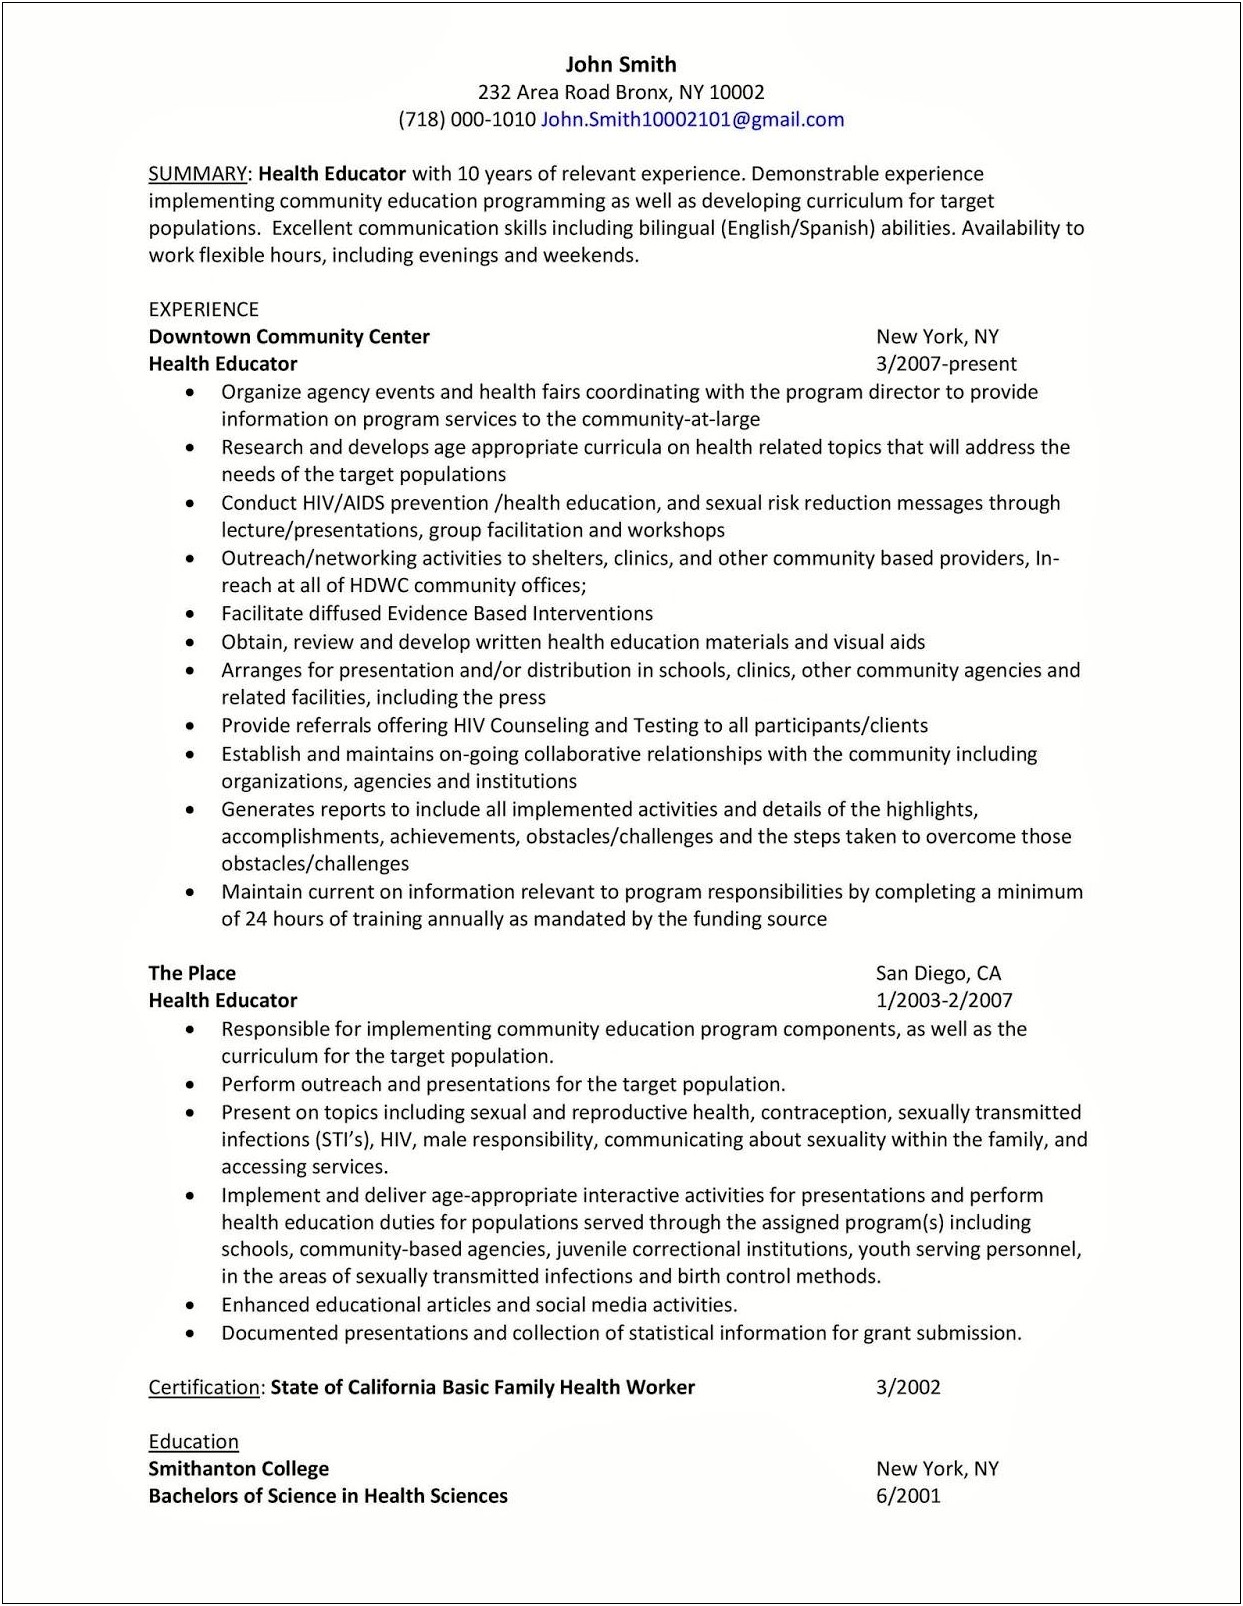 Professional Summary For Nurse Educator Resume